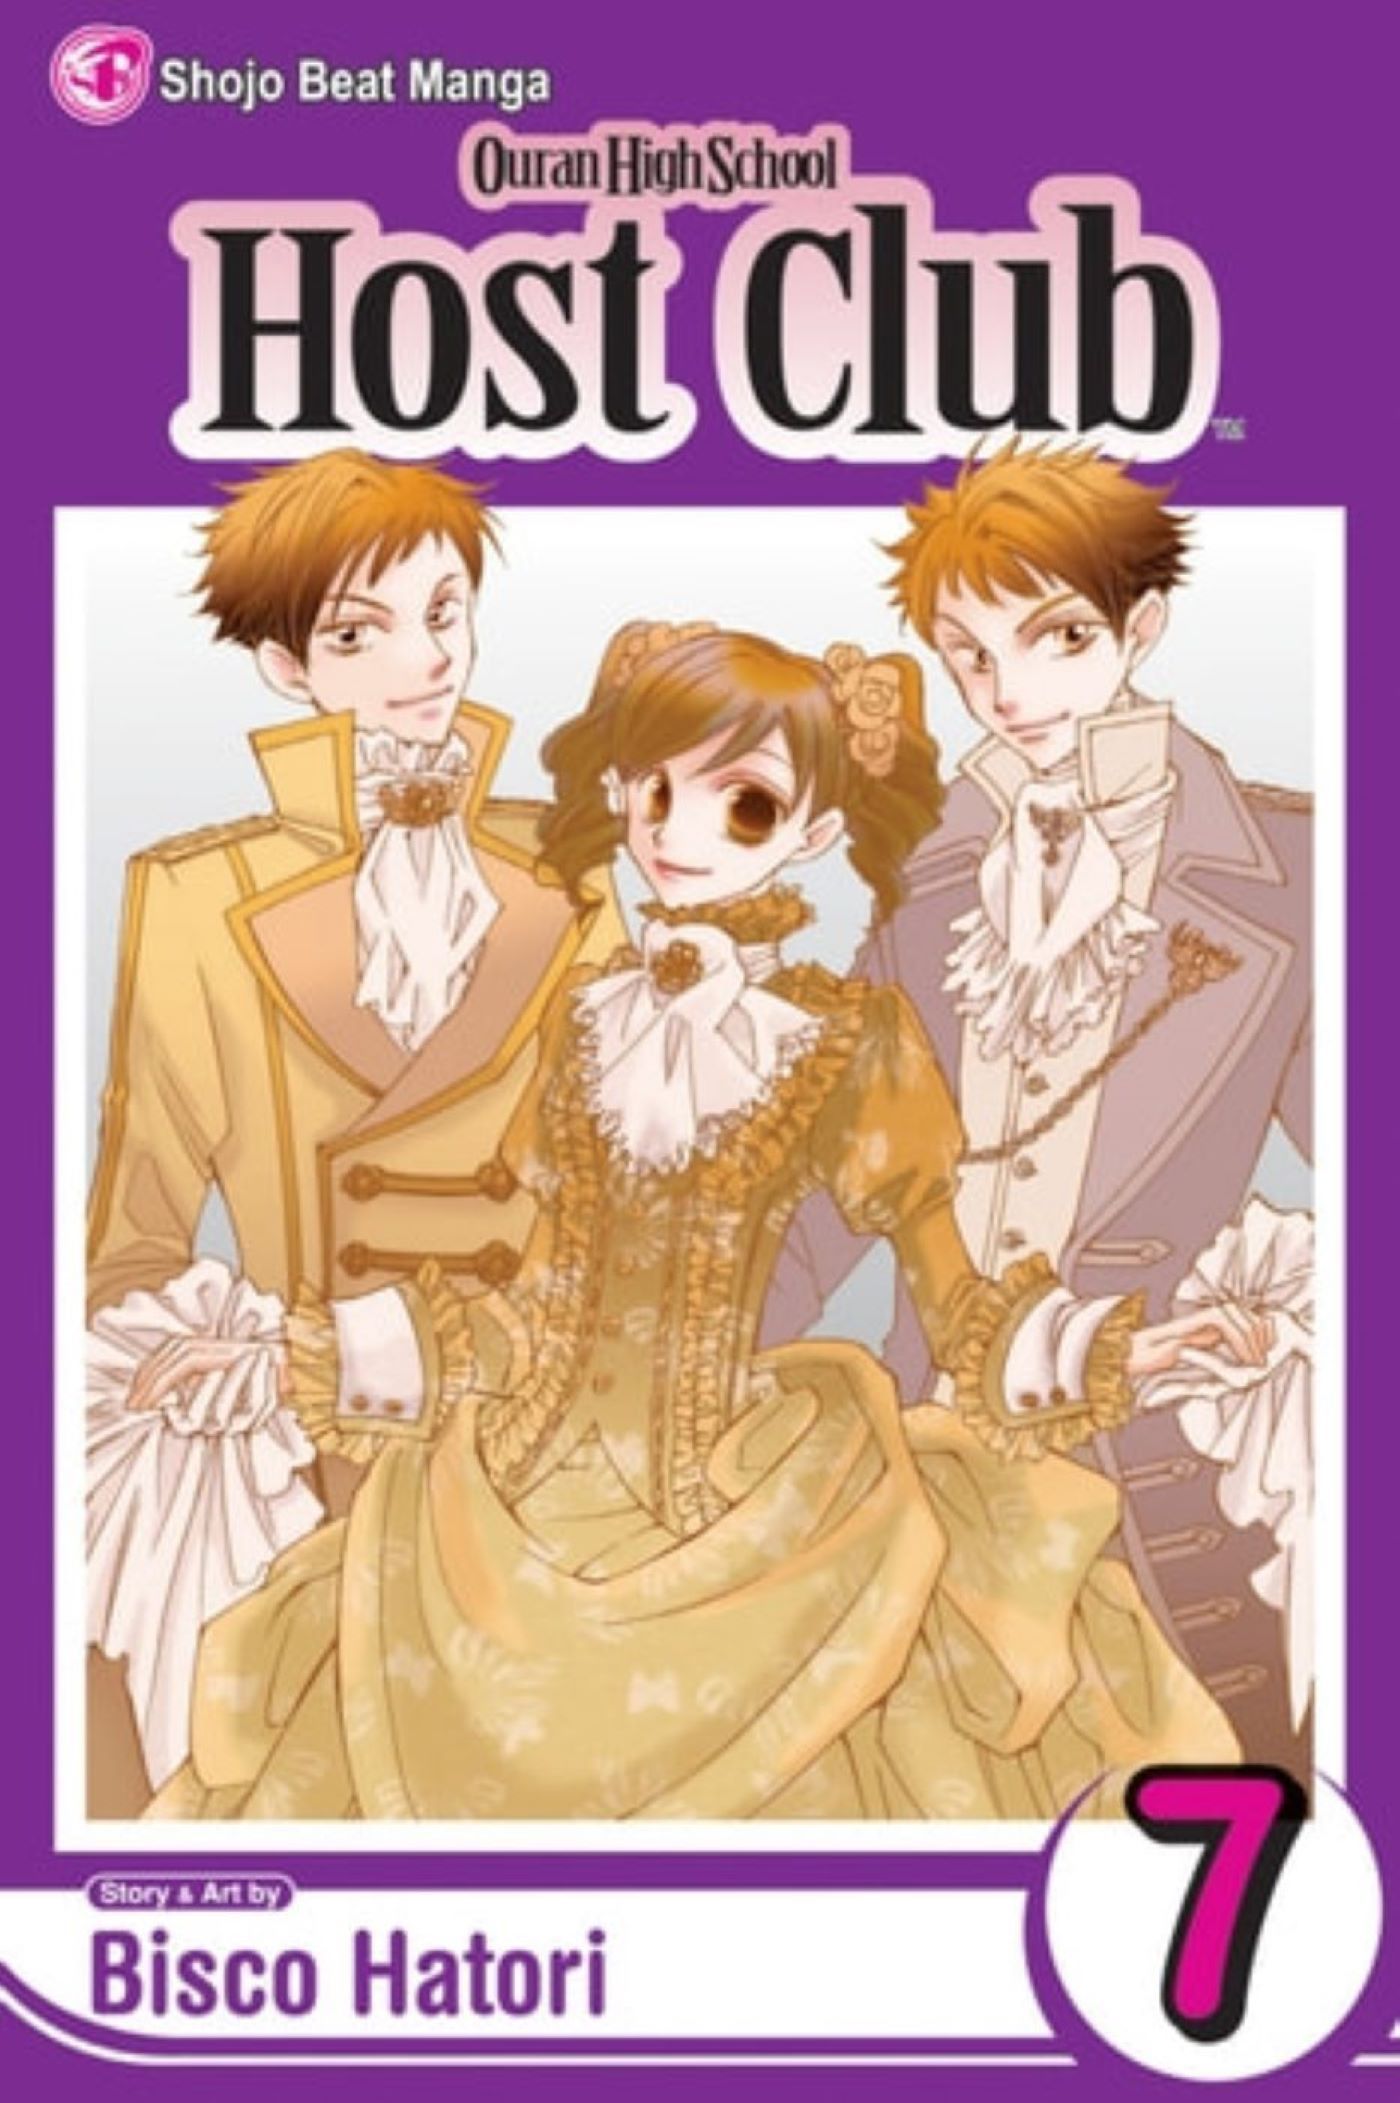 Ouran High School Host Club - Volume 7 - Hikaru, Kaoru, and Haruhi in old western royal clothing